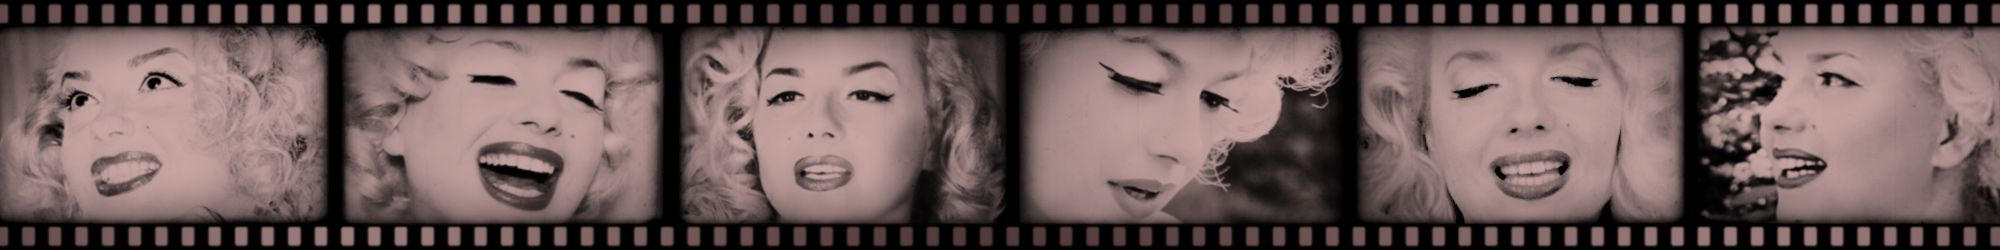 Babsy Artner as Marilyn Monroe - Official Website Banner